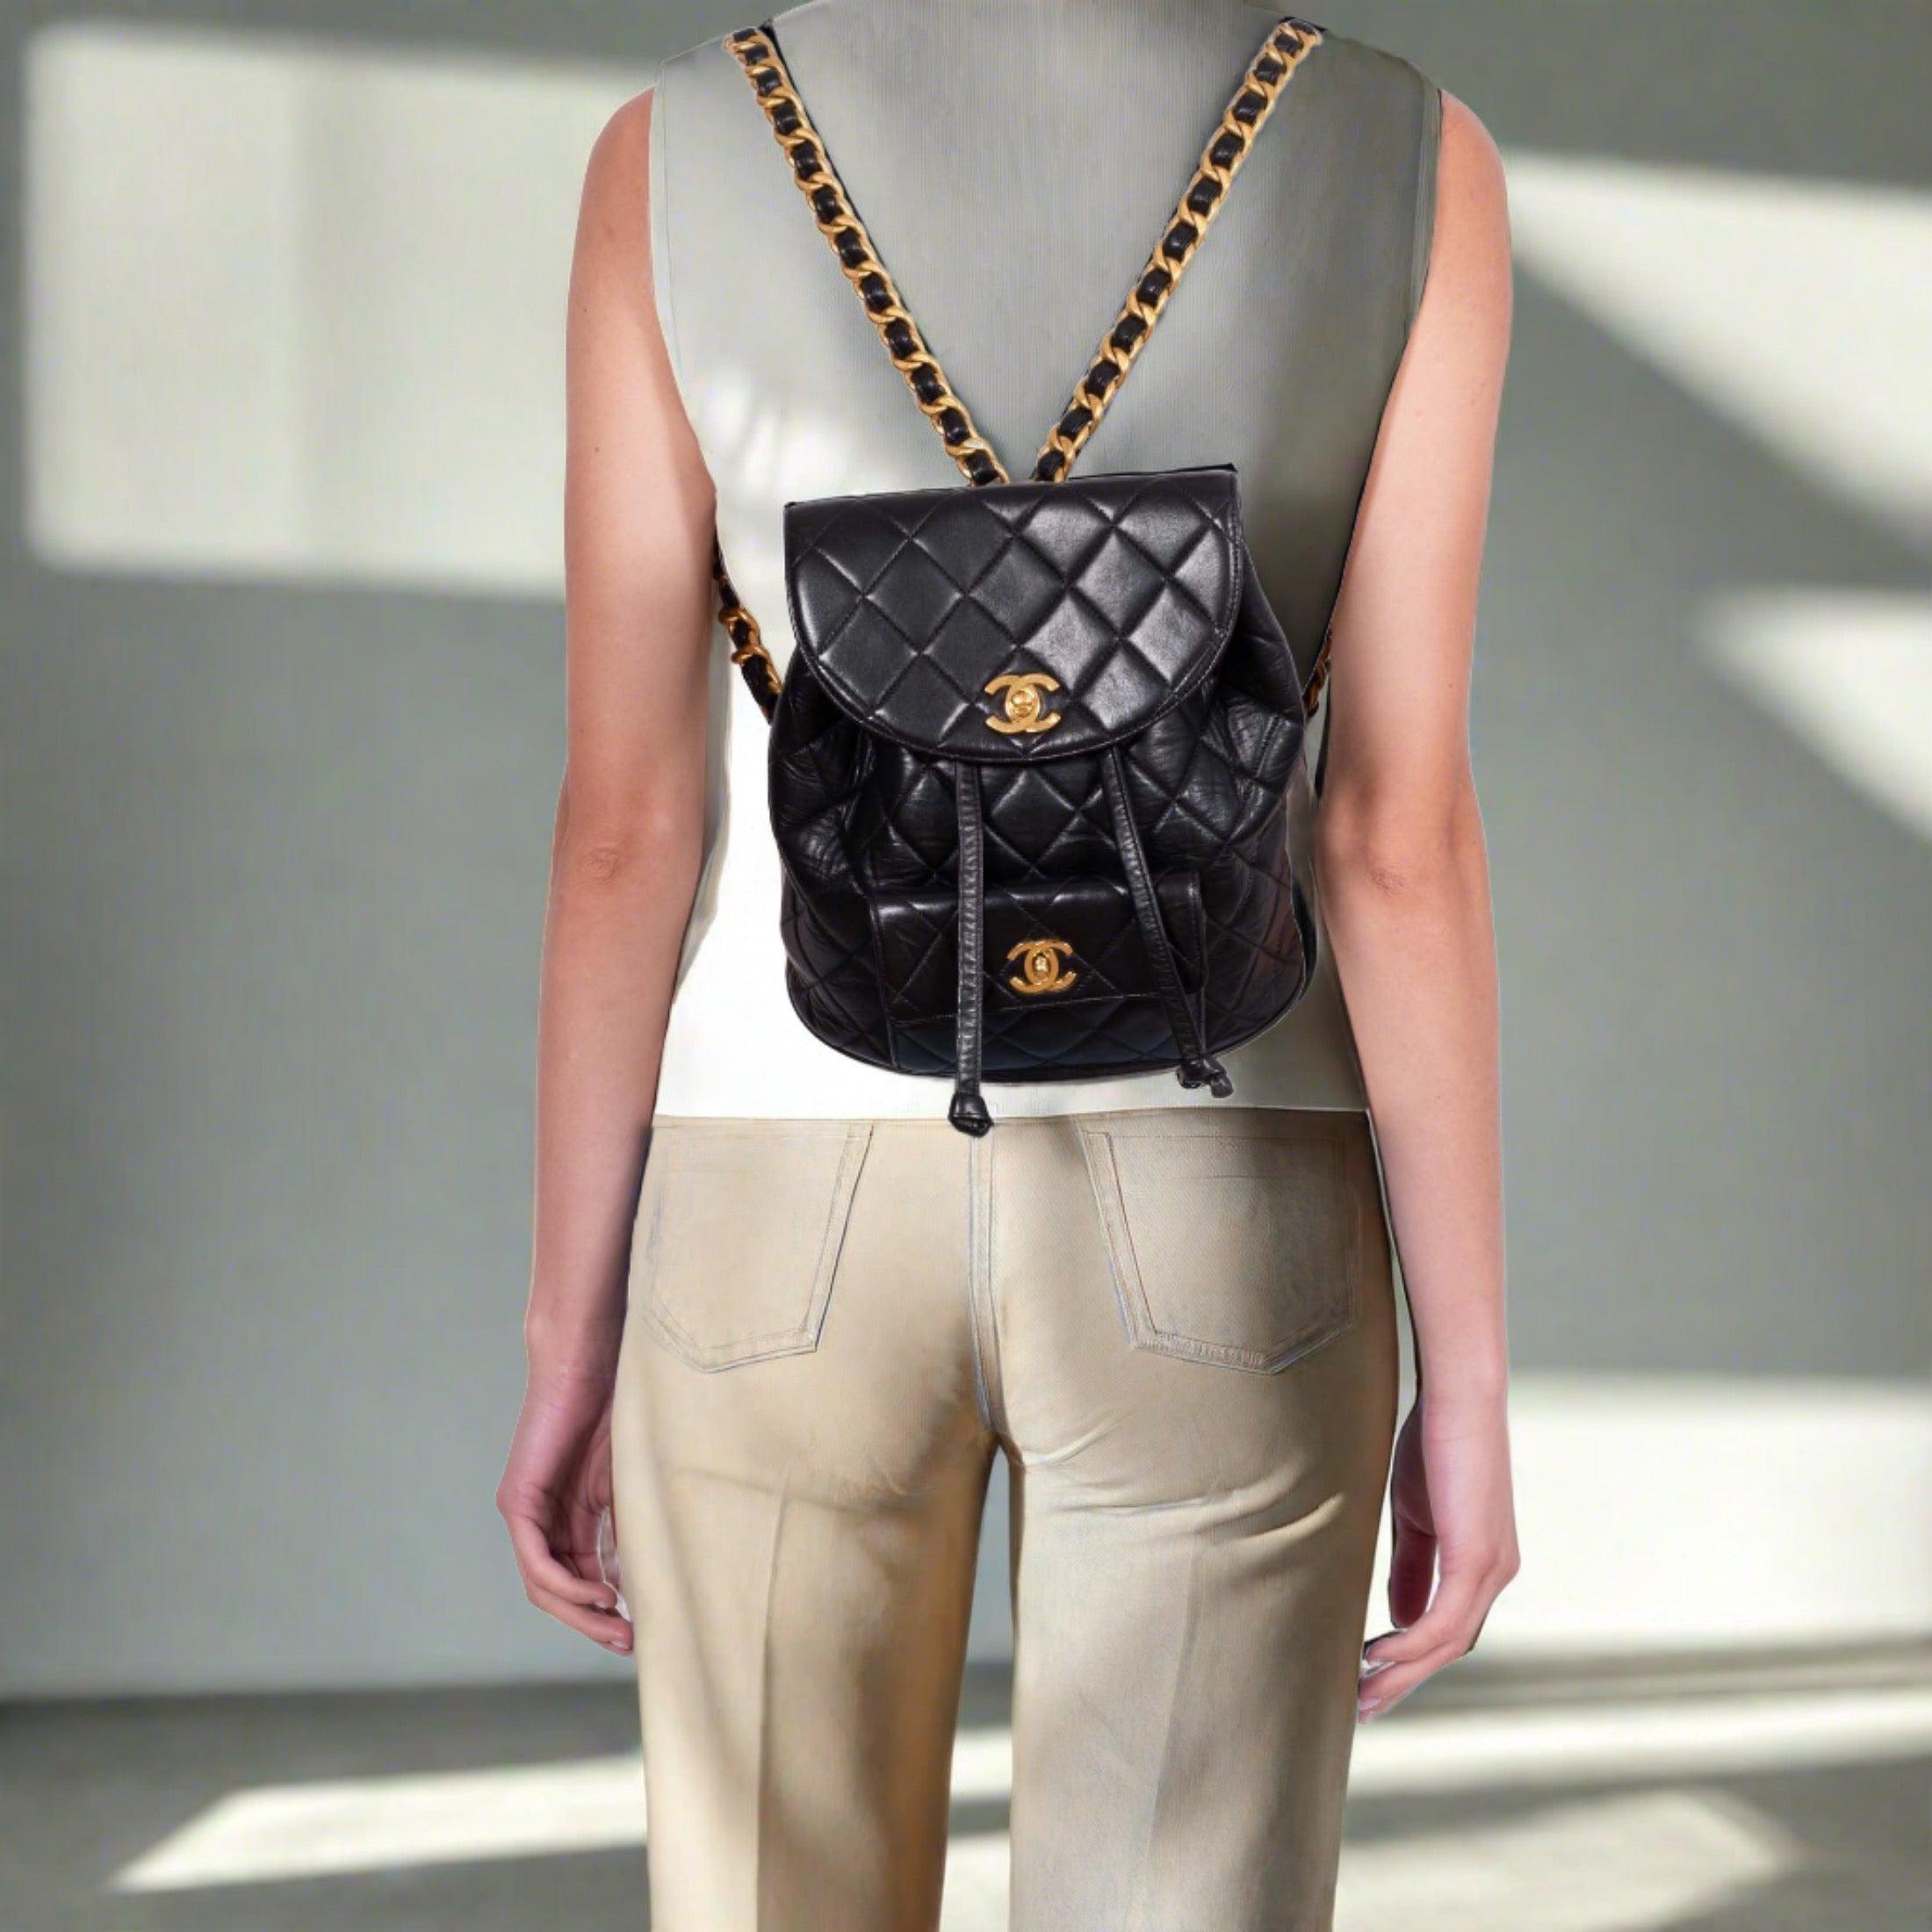 Chanel Mini Duma Backpack Black Quilted Lambskin Gold Hardware